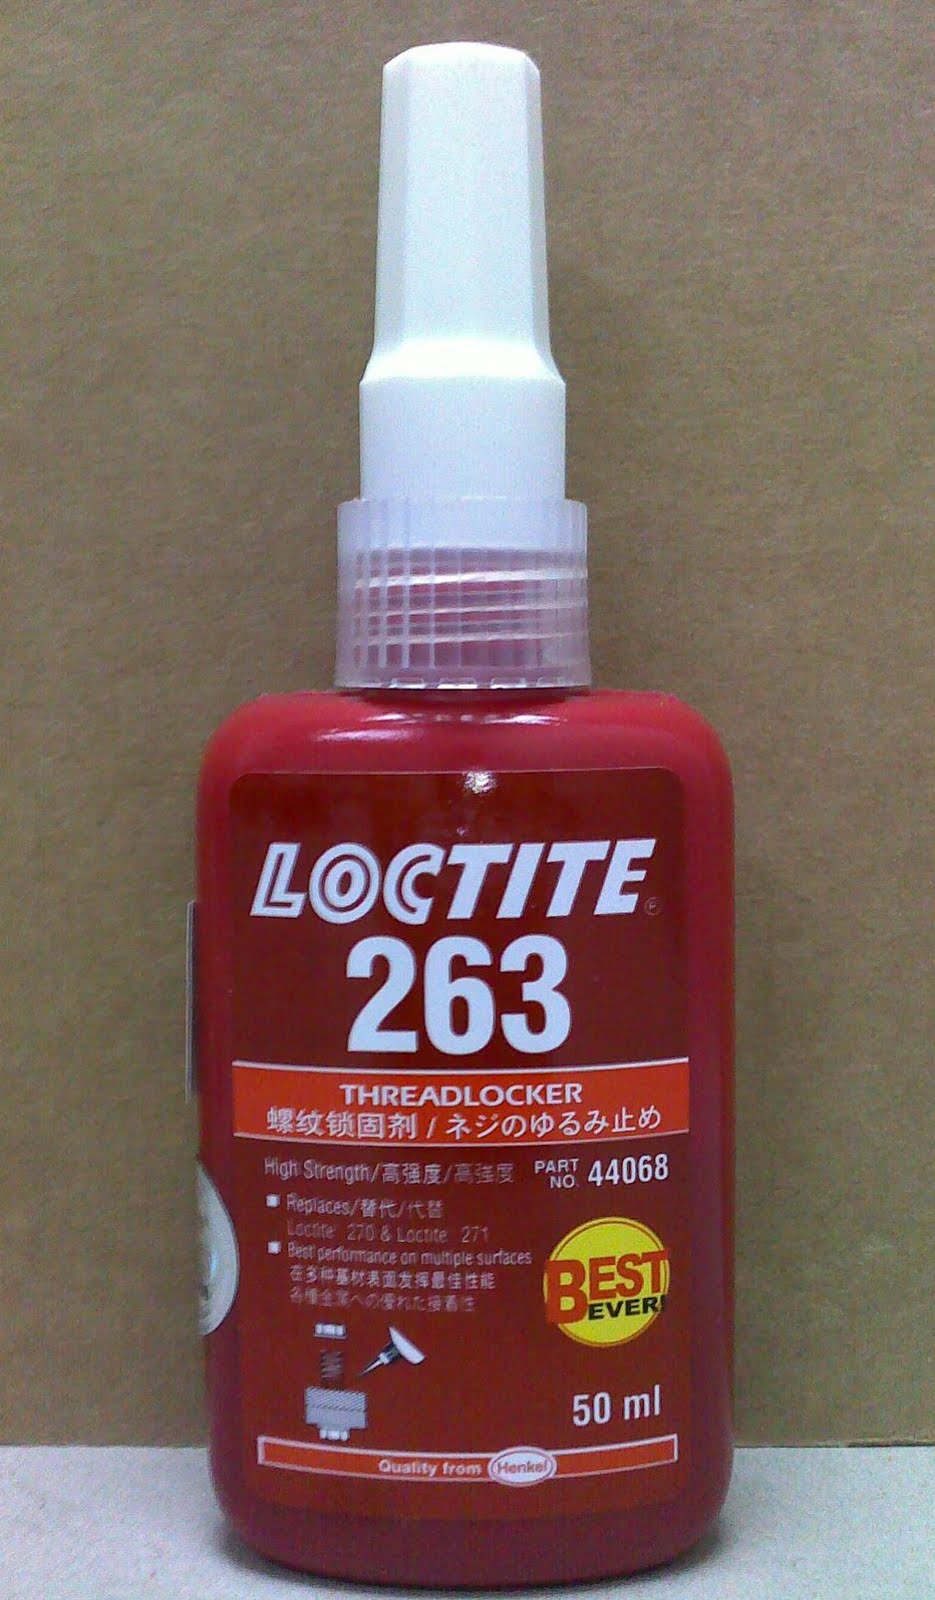 Loctite+263+Threadlocker.jpg